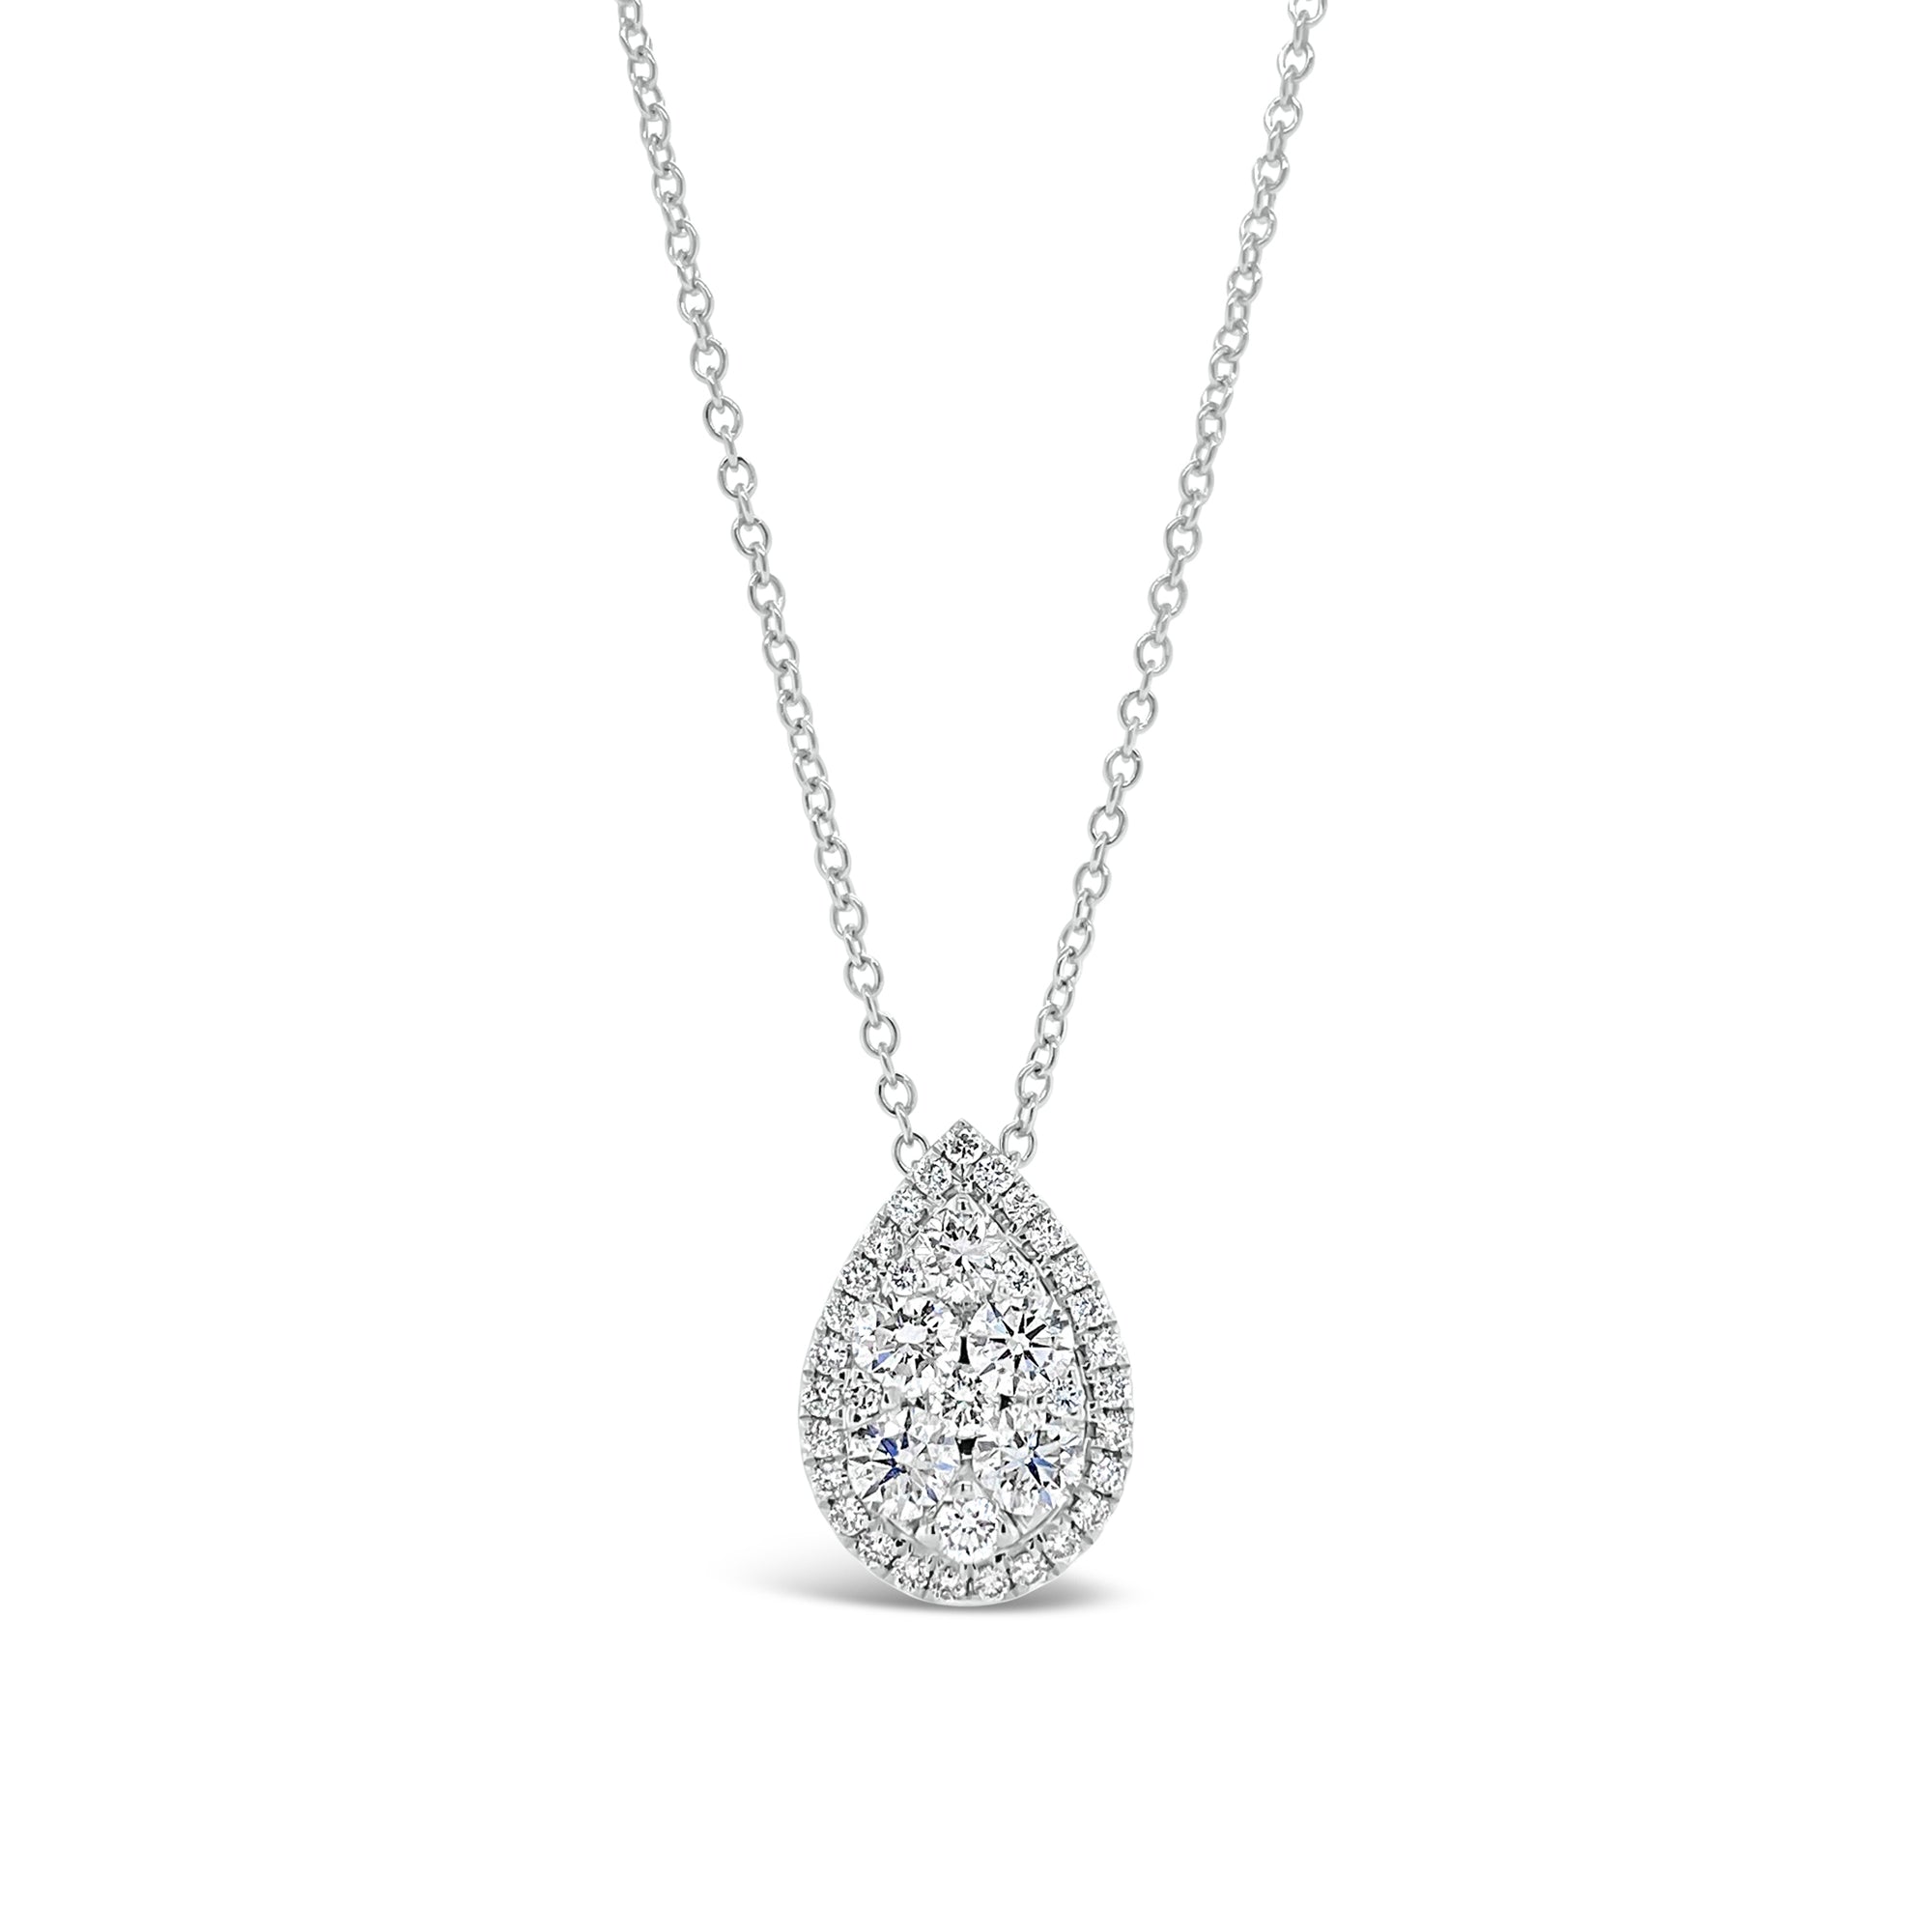 Diamond Teardrop Pendant  - 18K gold weighing 3.71 grams  - 39 round diamonds totaling 0.93 carats